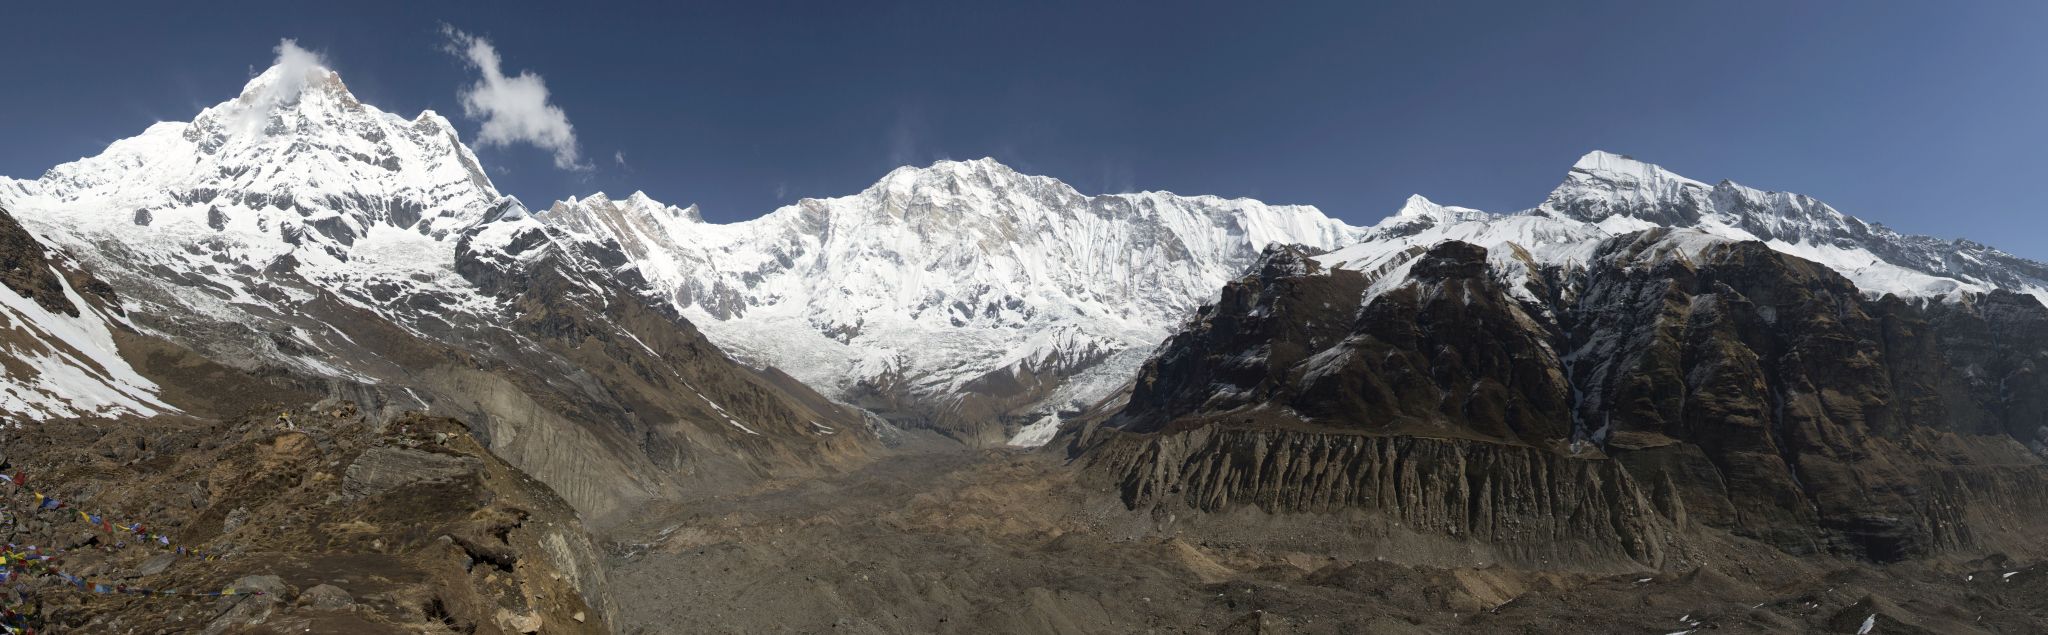 Annapurna South Peak, Annapurna I and Tent Peak above Annapurna Sanctuary